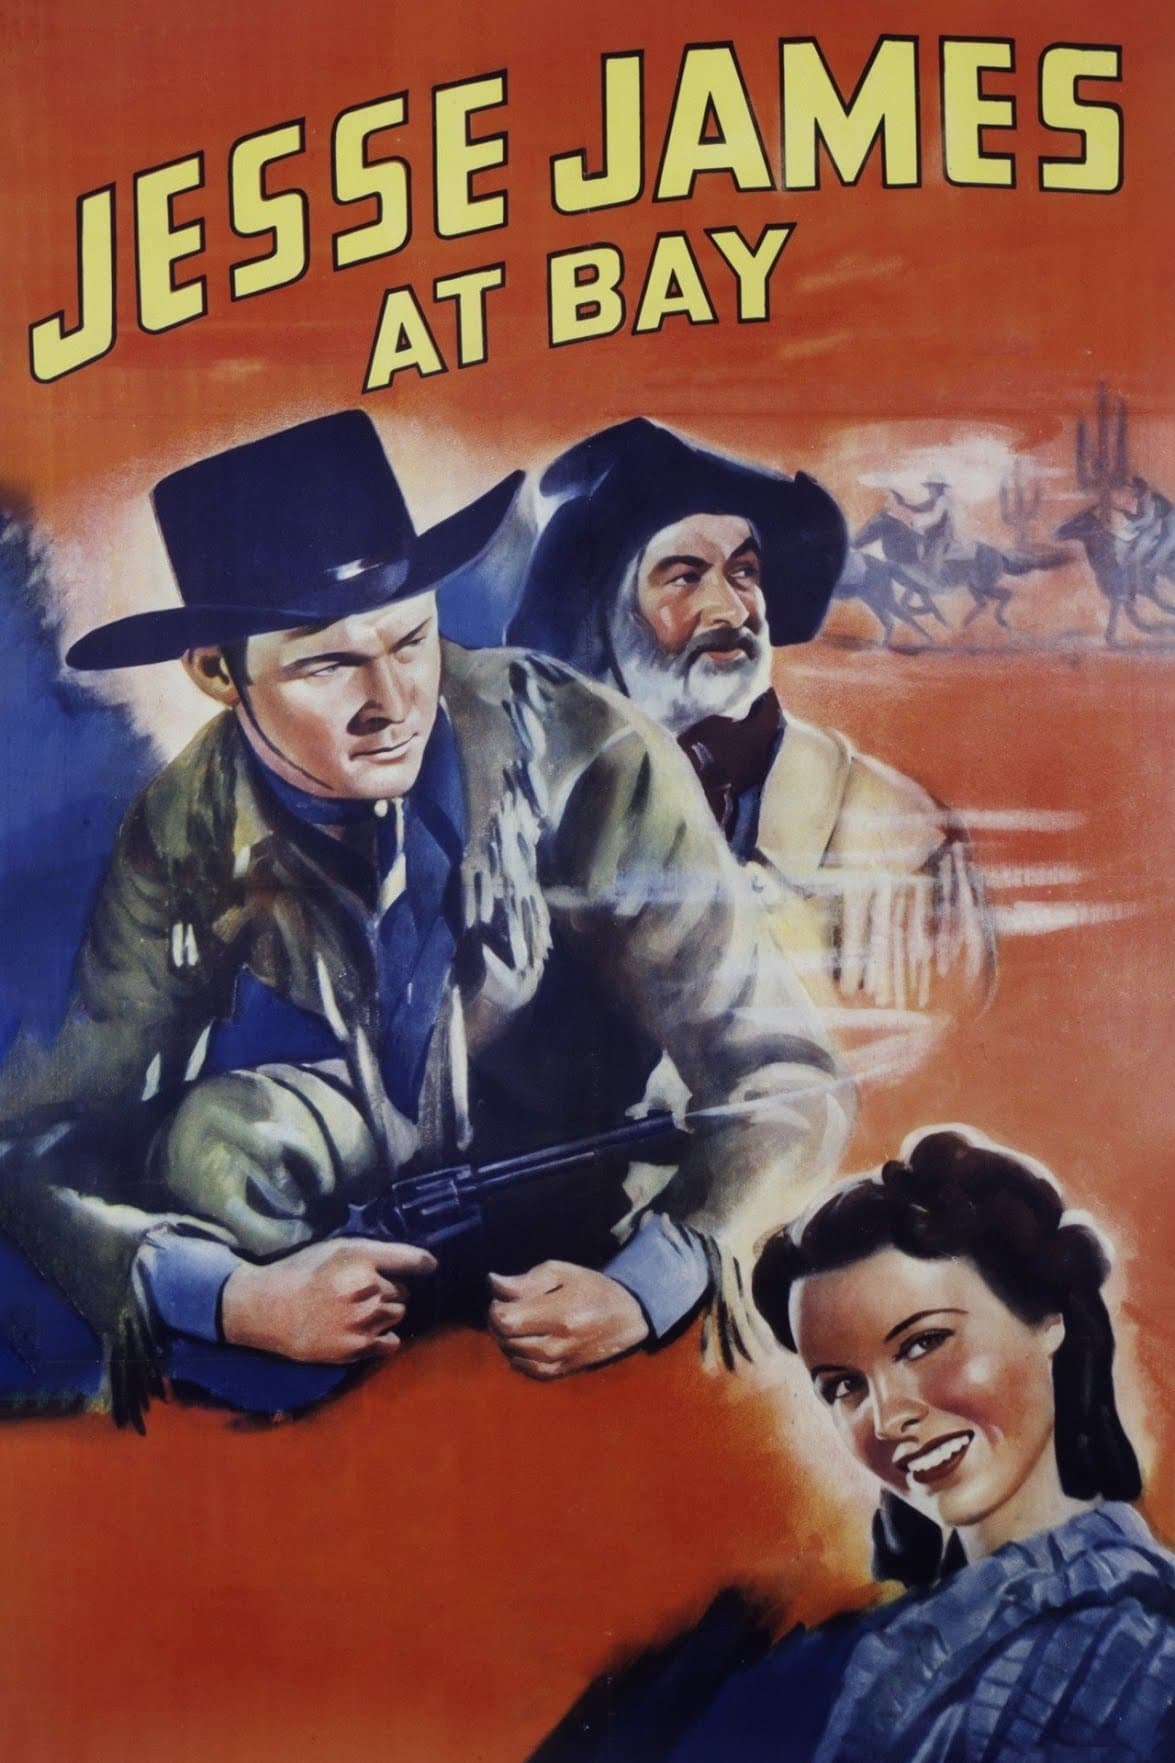 Jesse James at Bay (1941)